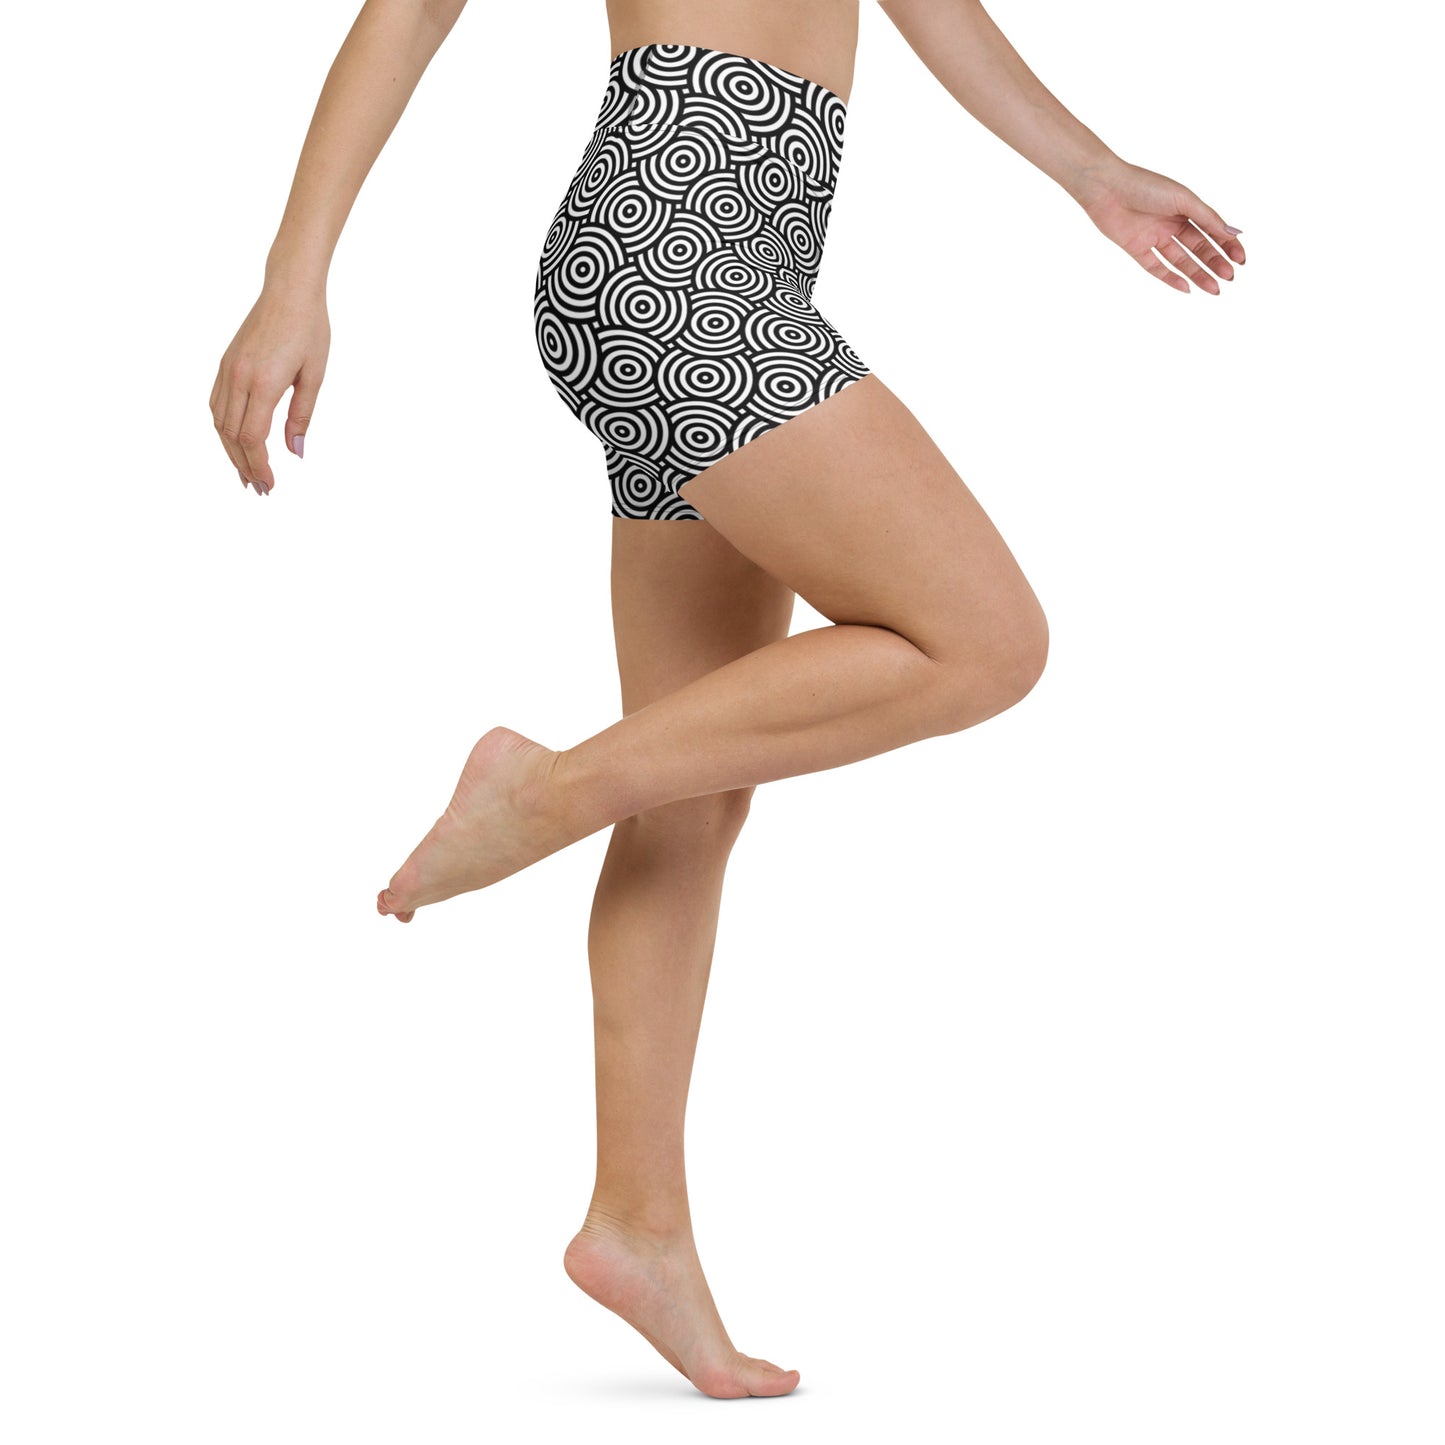 Geometric Chic Pattern Yoga Shorts